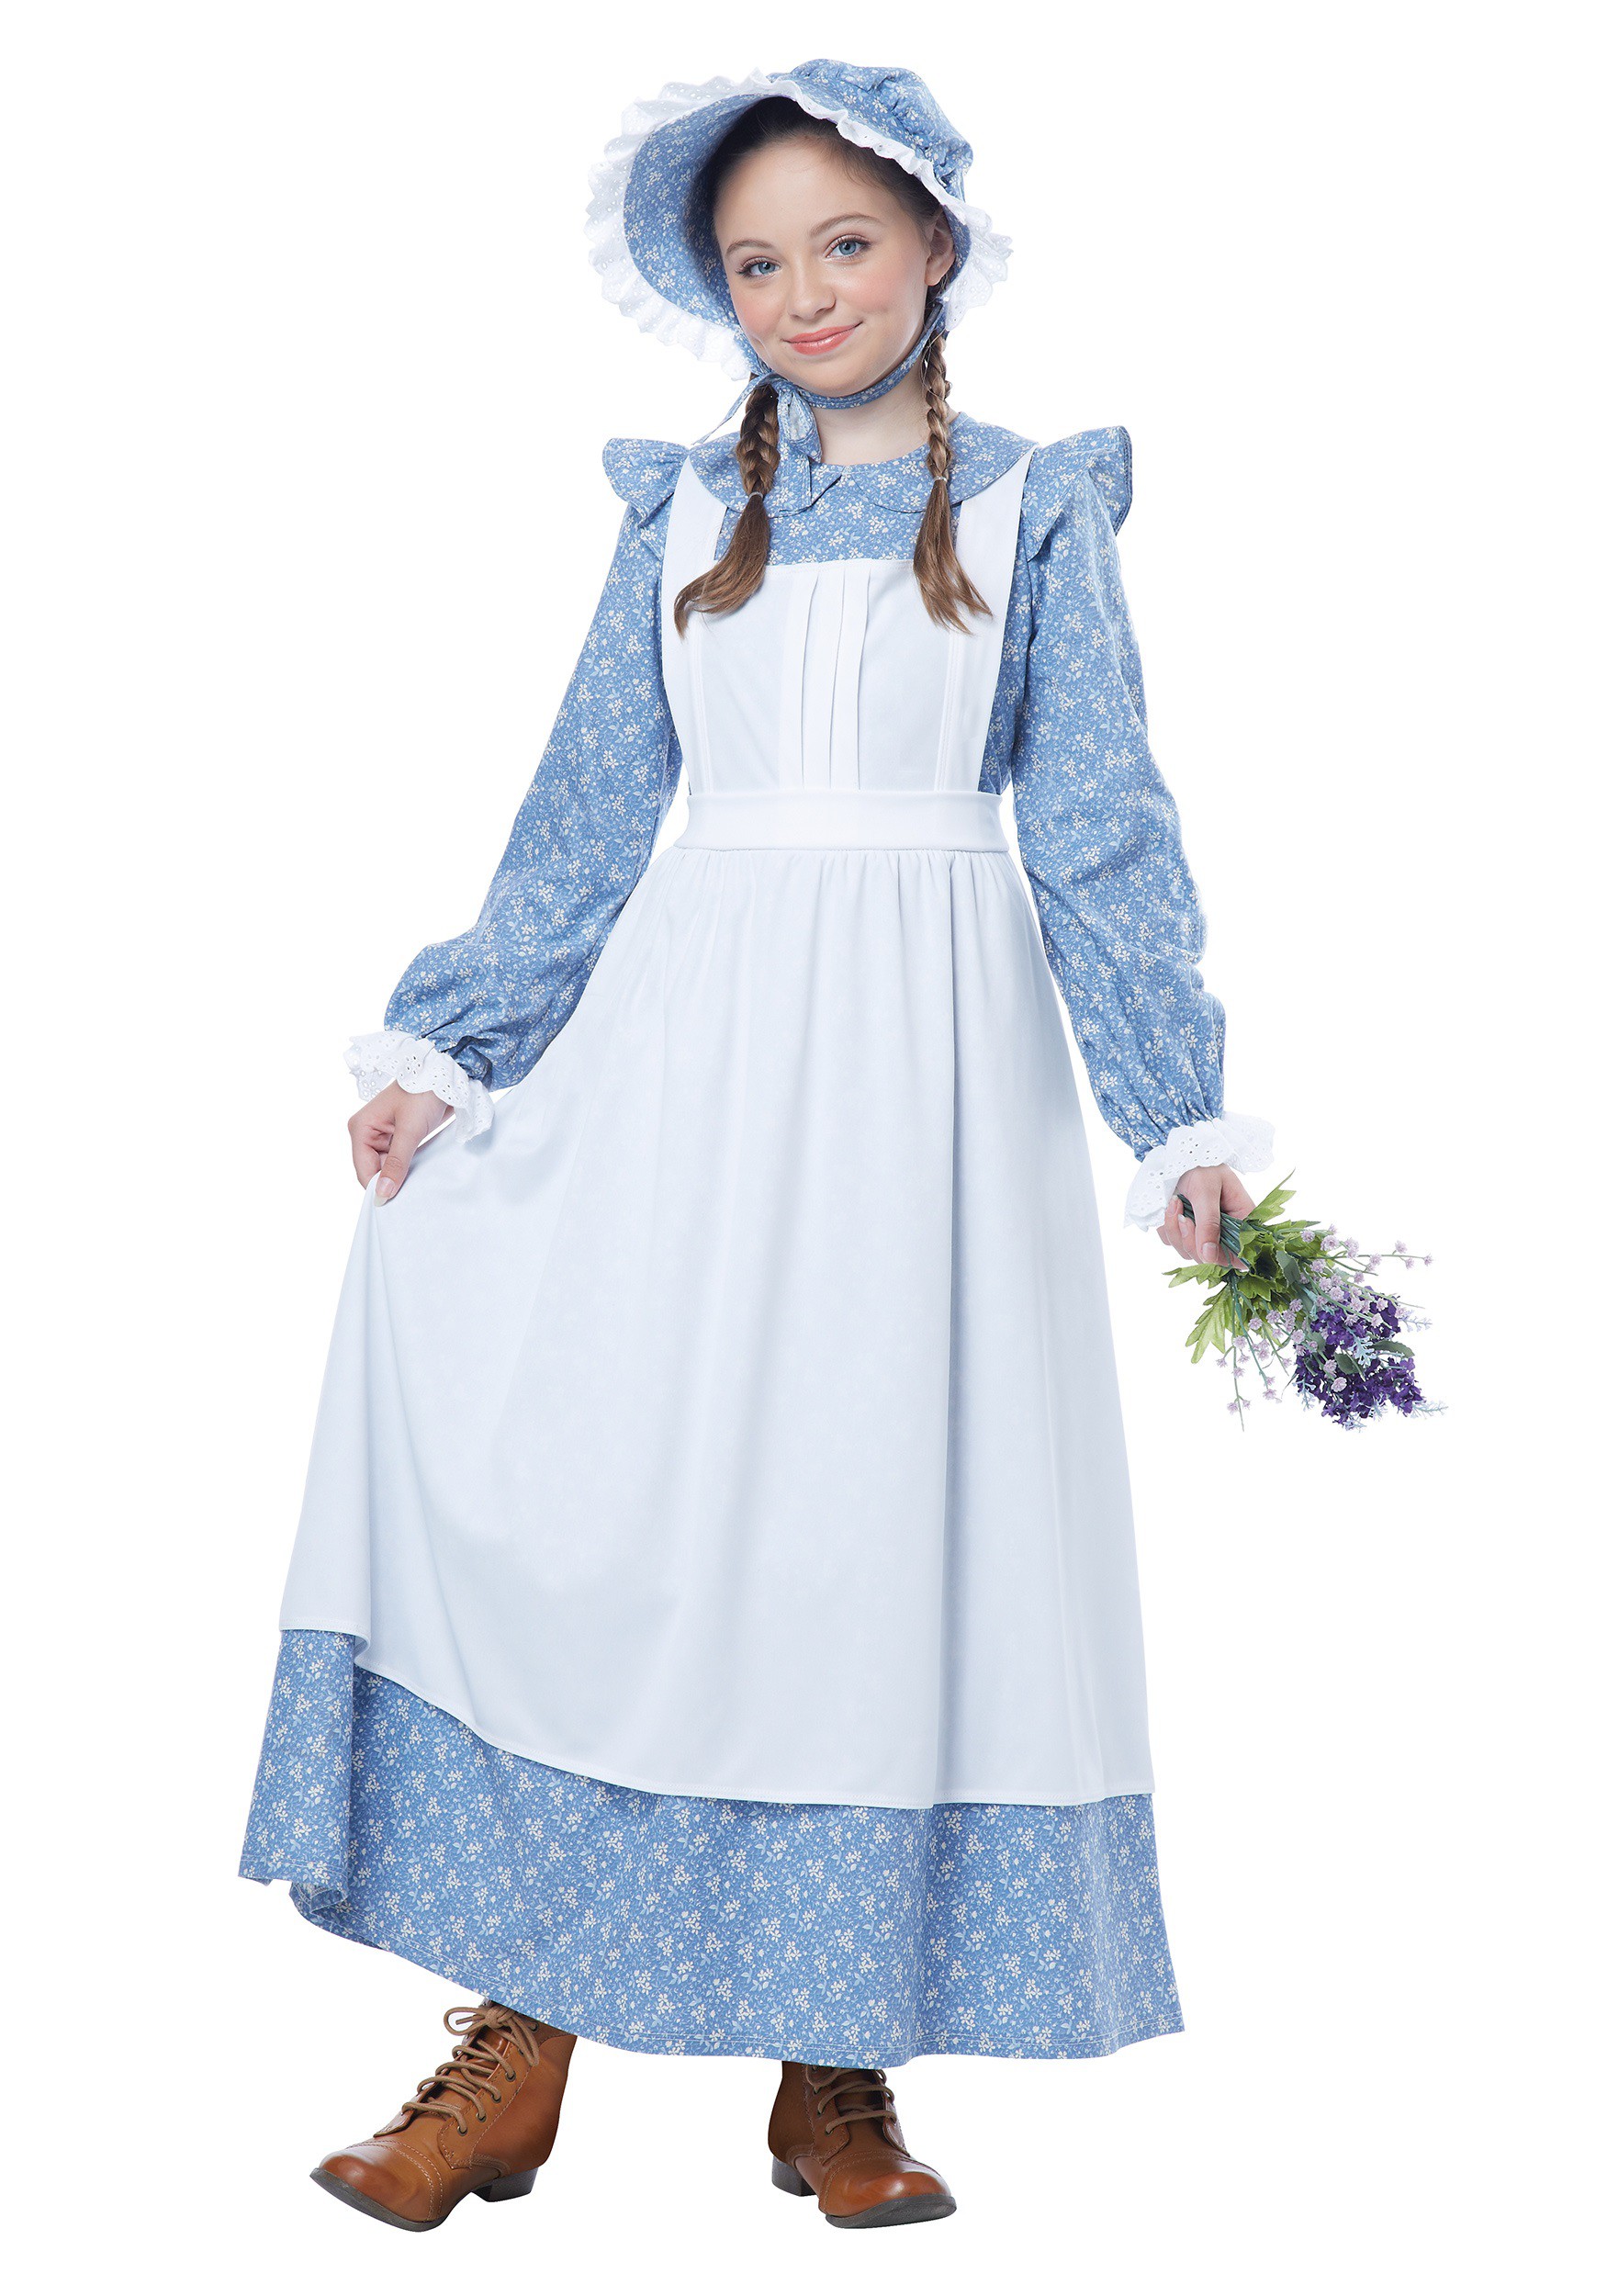 Pioneer Dresses For Girls